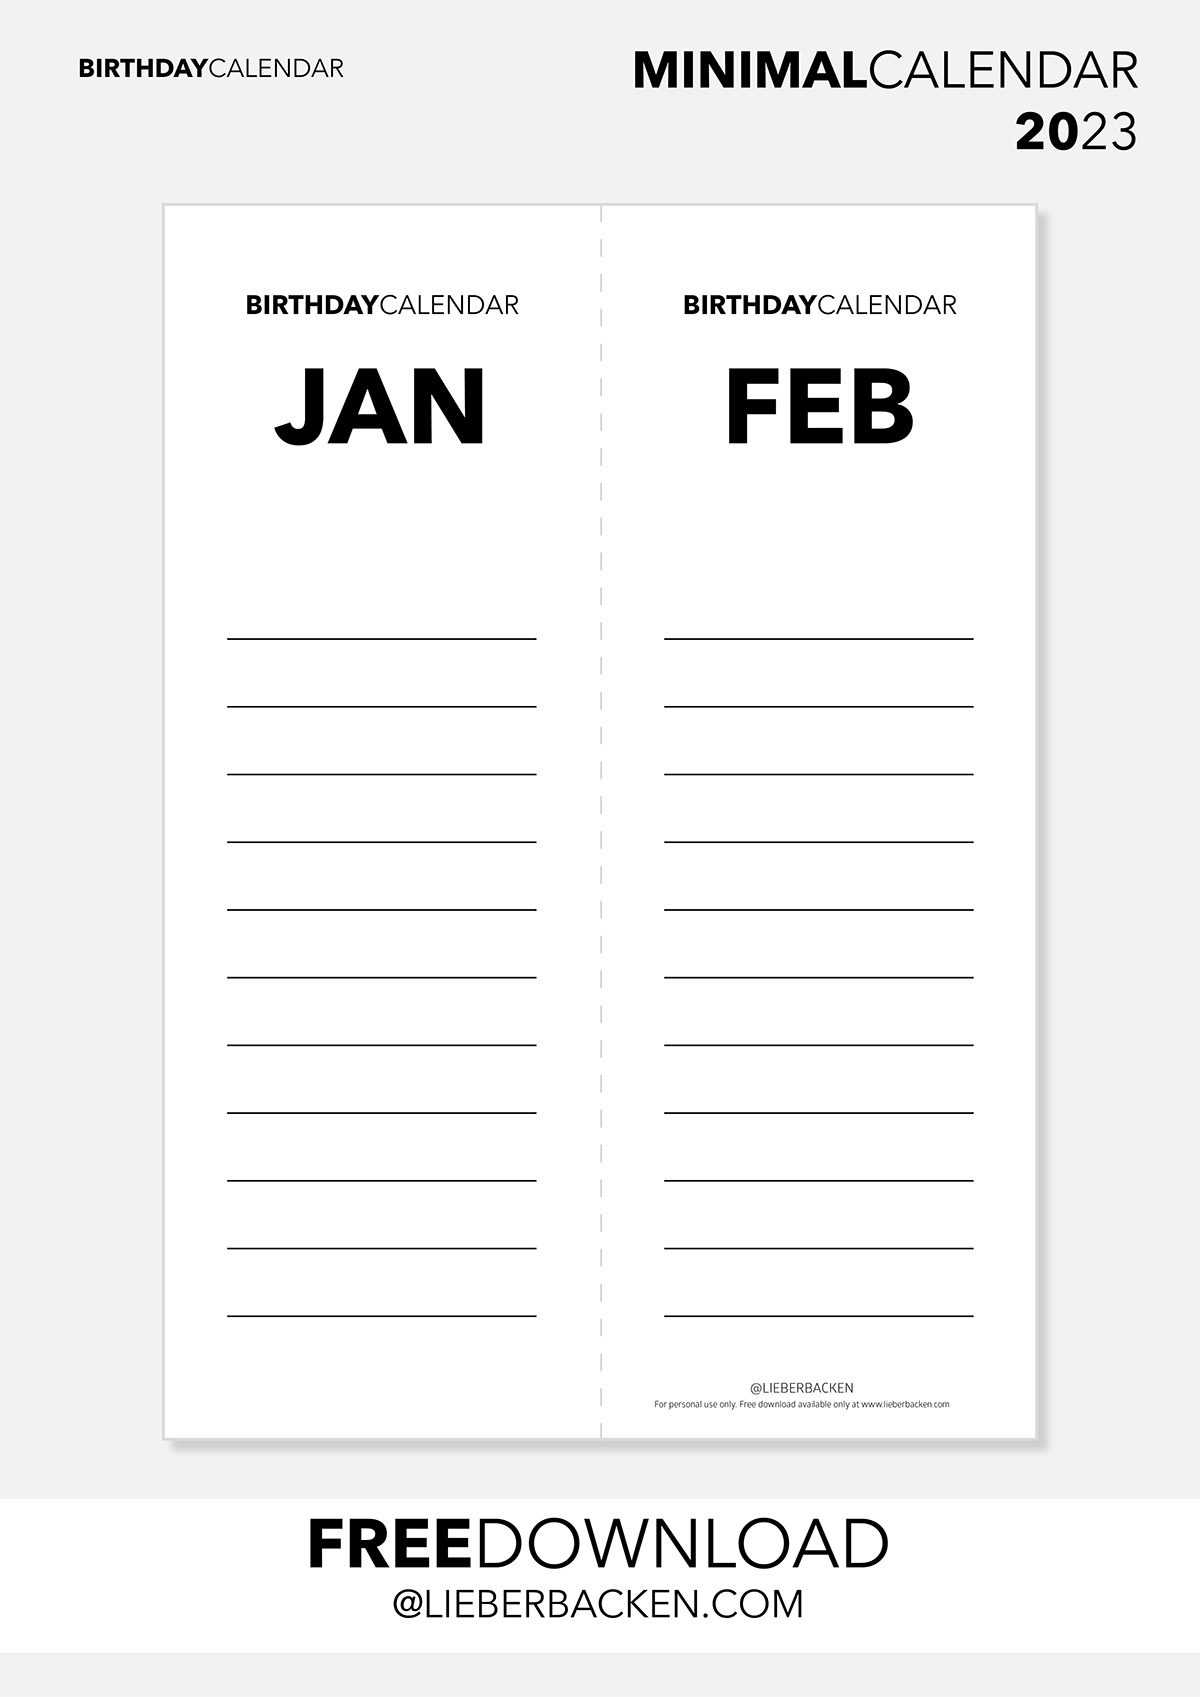 Free Printables: Birthday Calendar (Minimal Calendar Bundle) Freebies